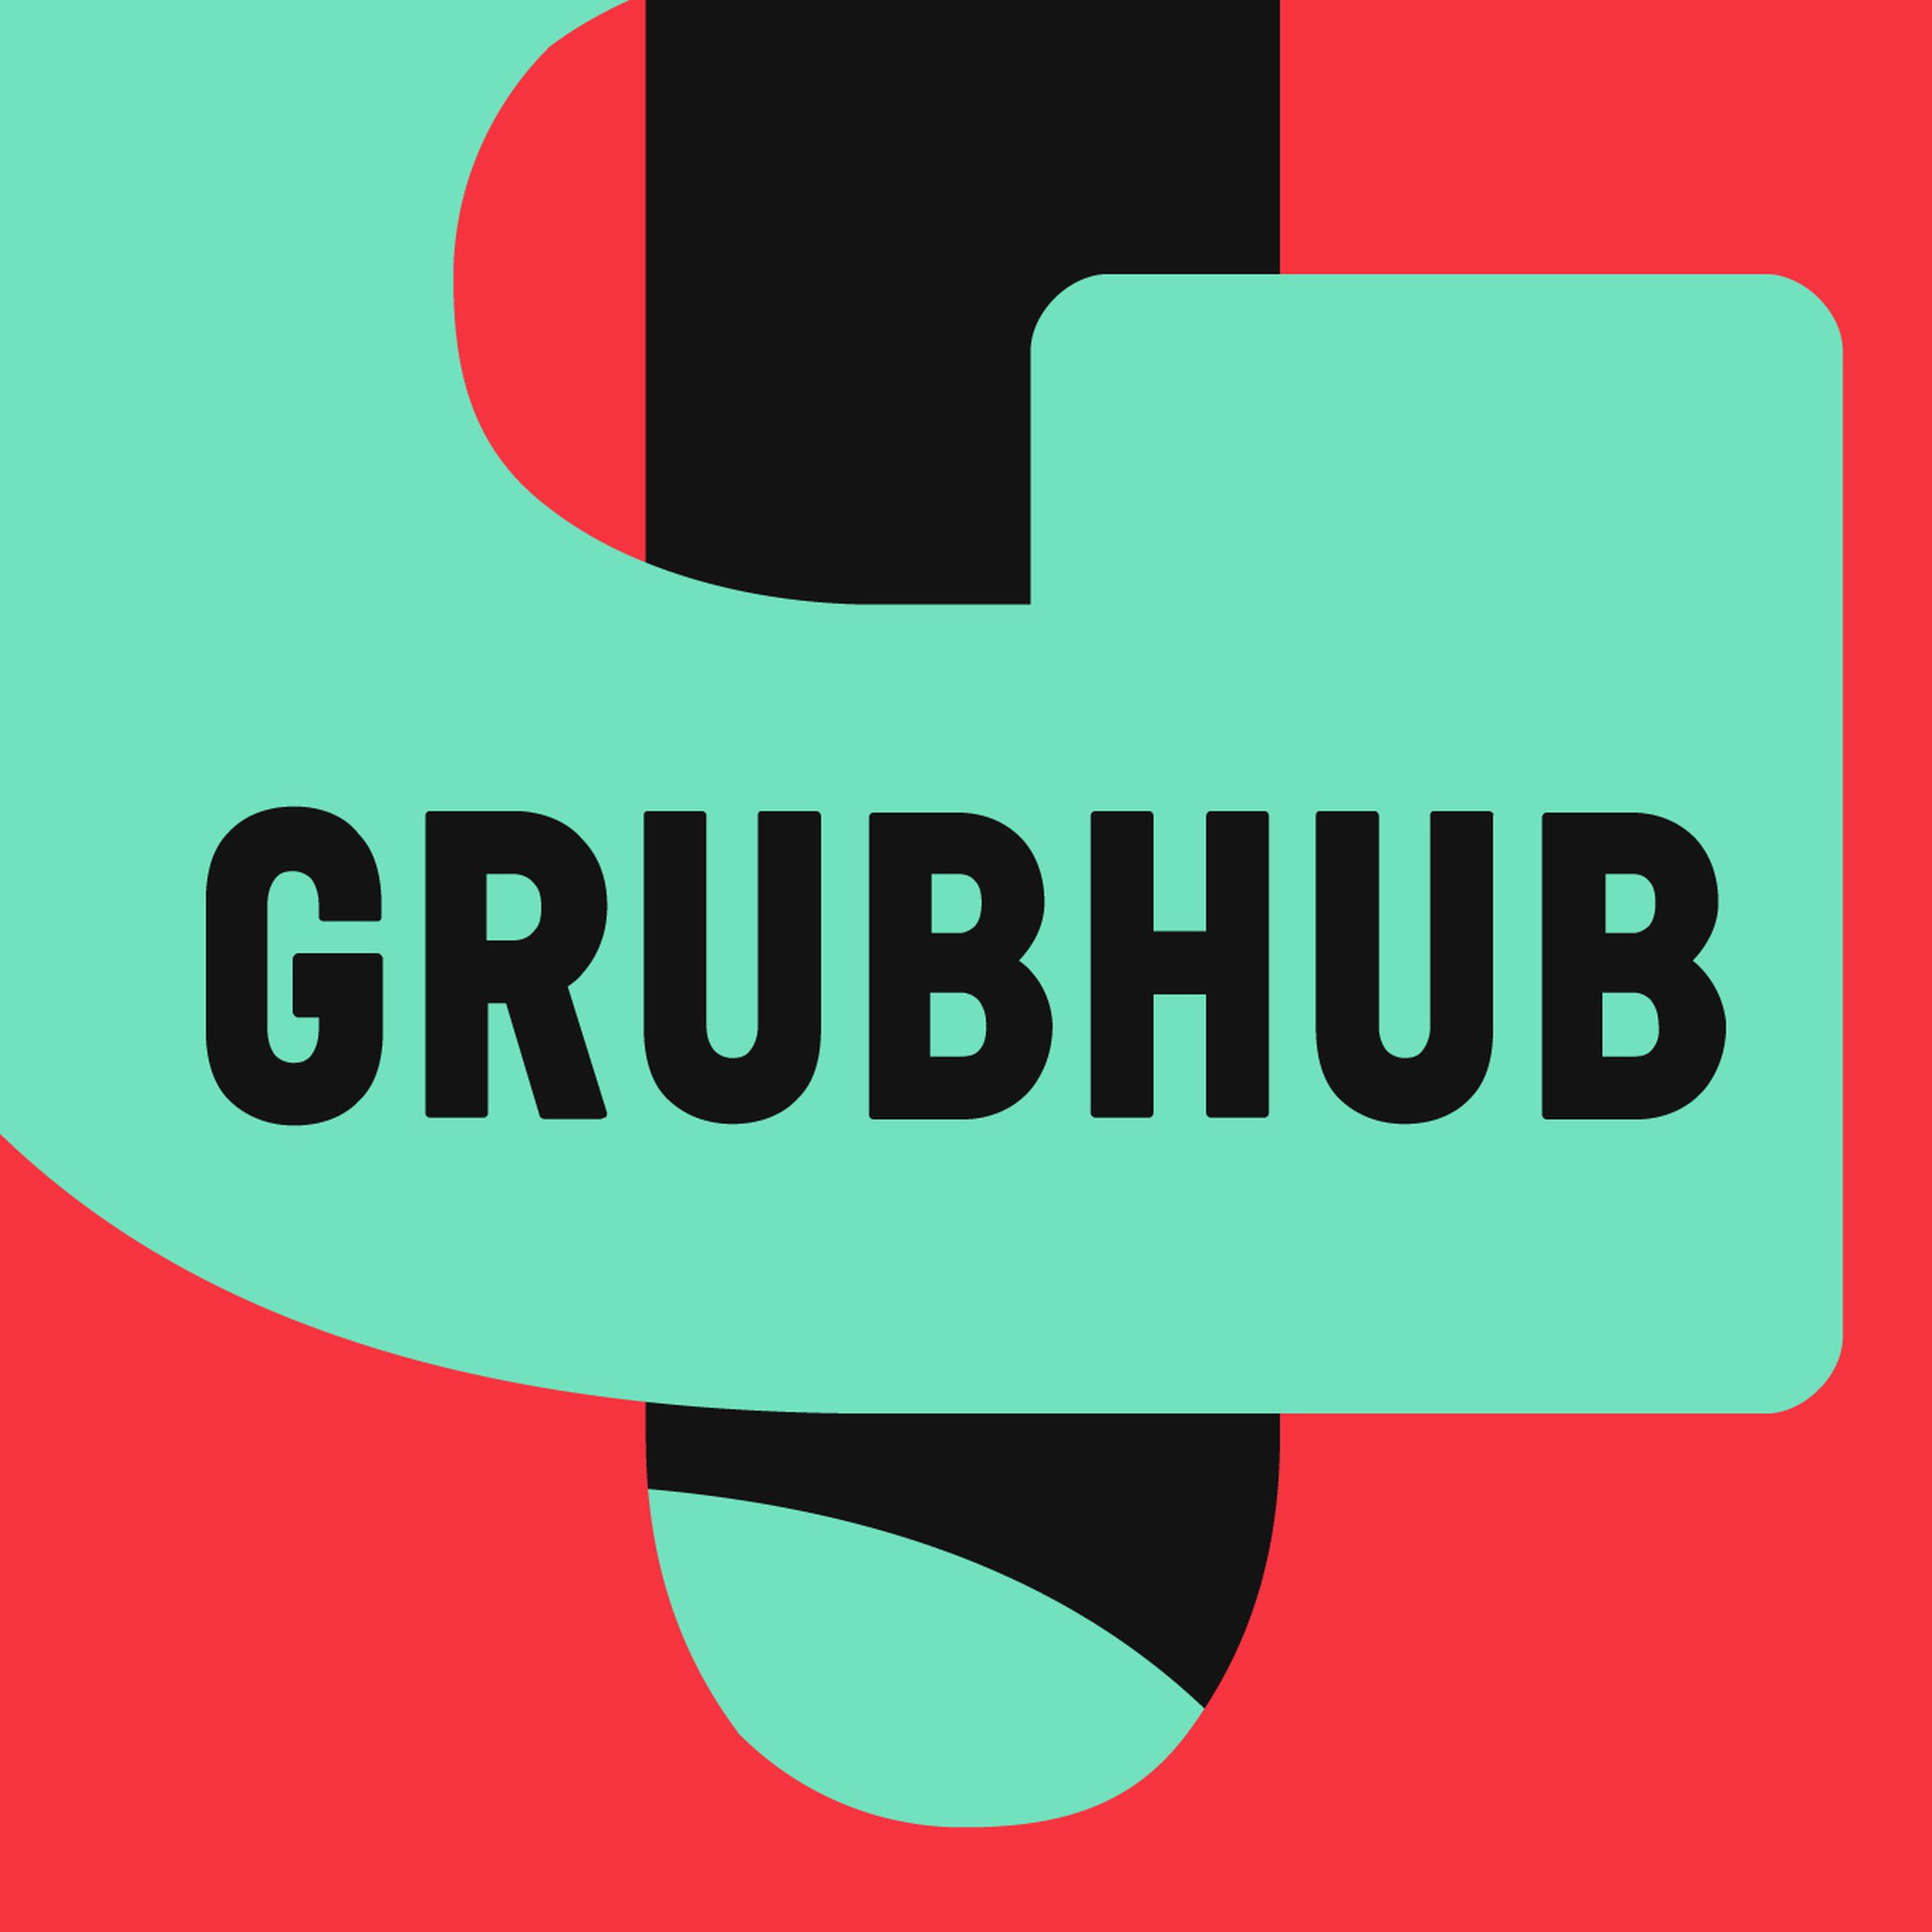 Illustration of the Grubhub logo